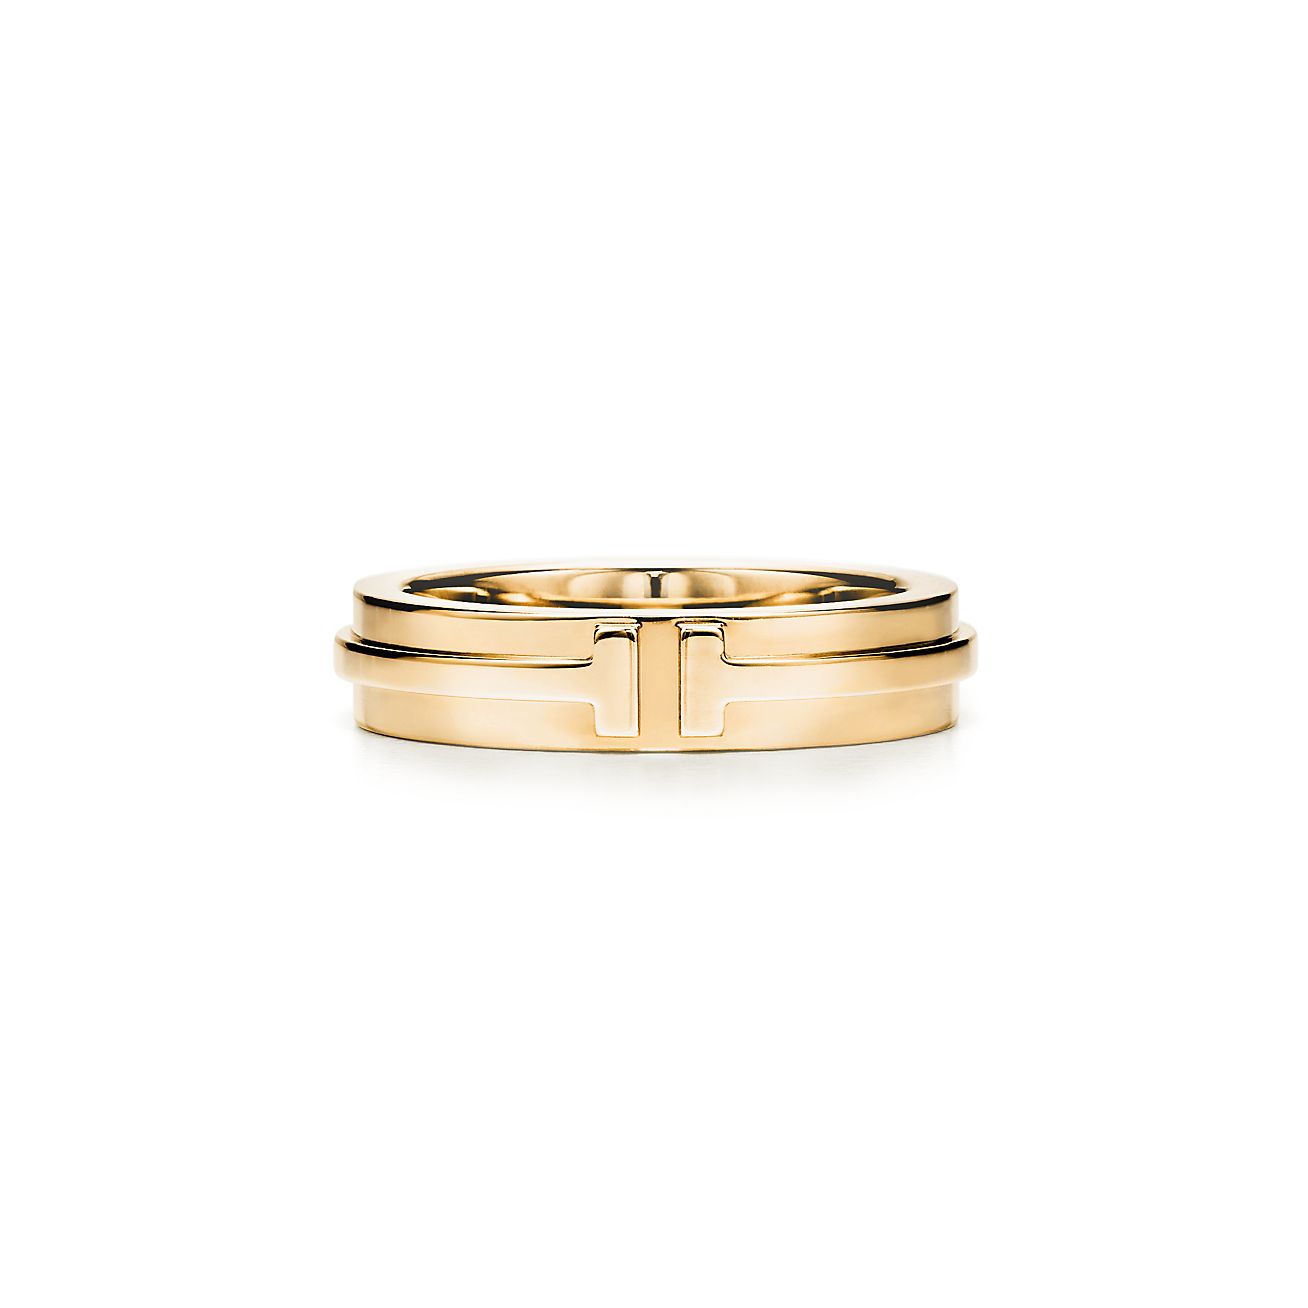 Tiffany T narrow ring in 18k gold, 4.5 